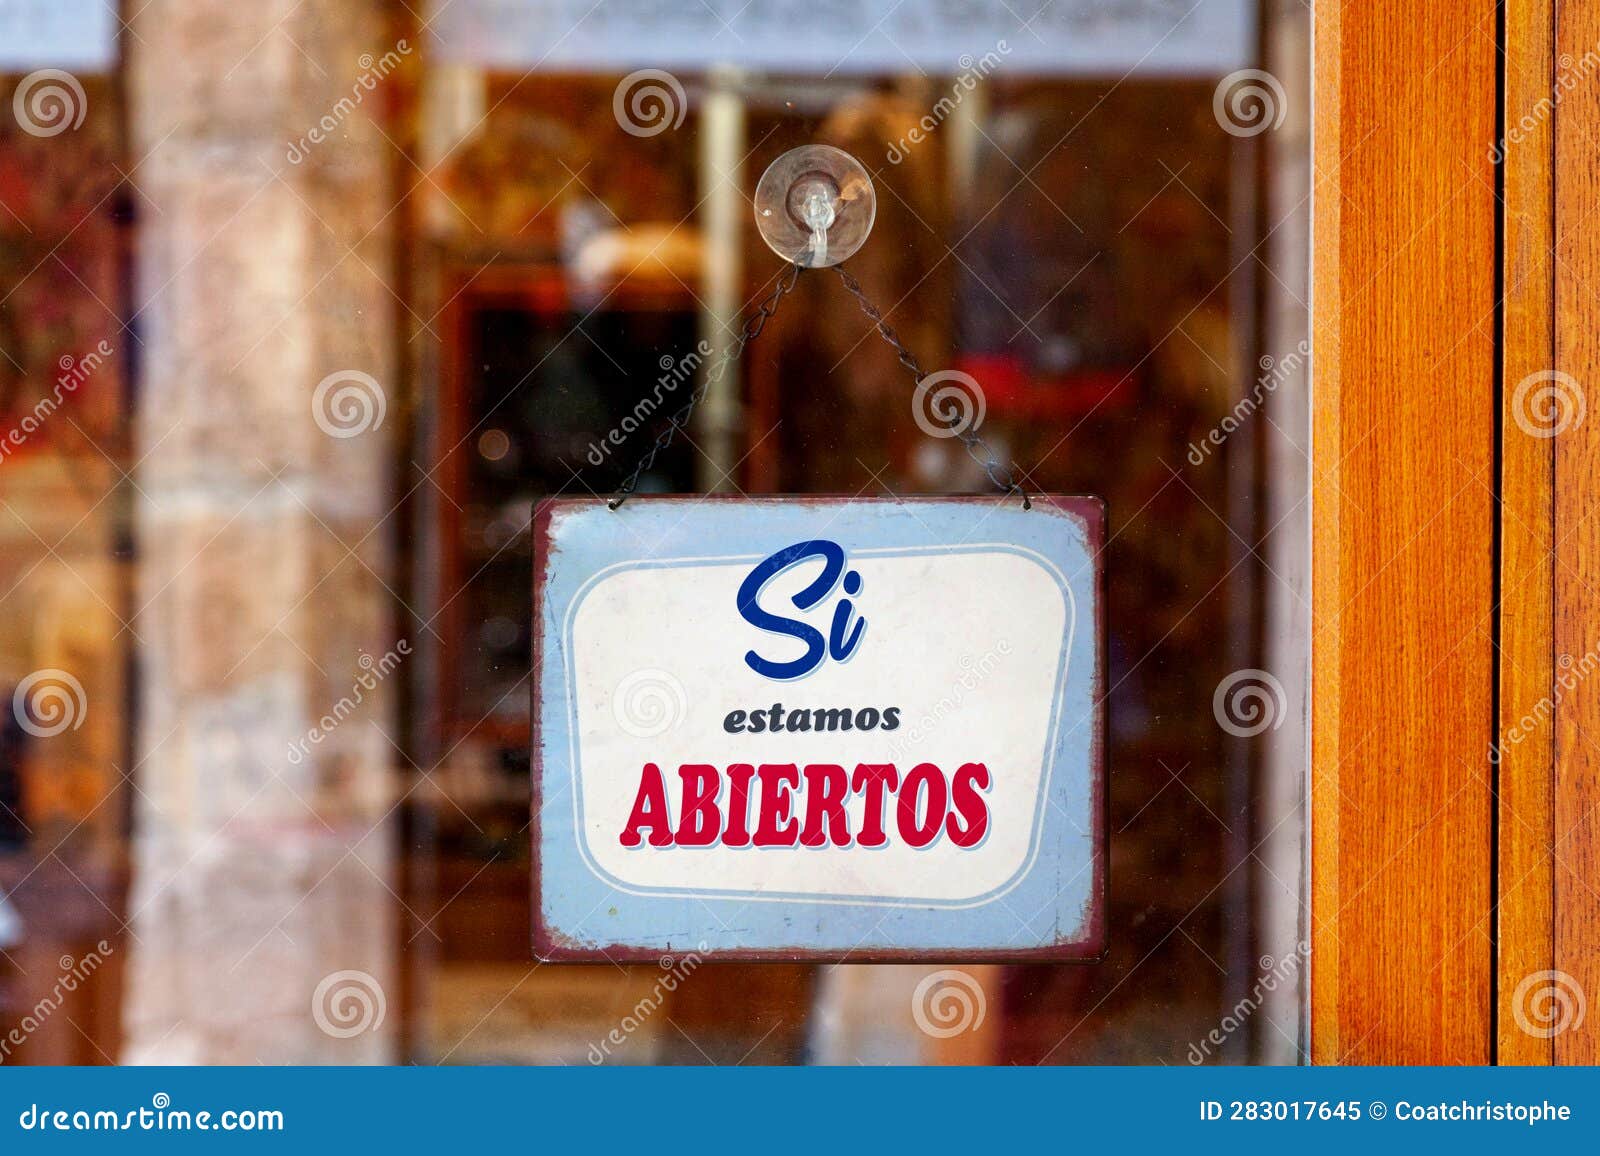 spanish open sign